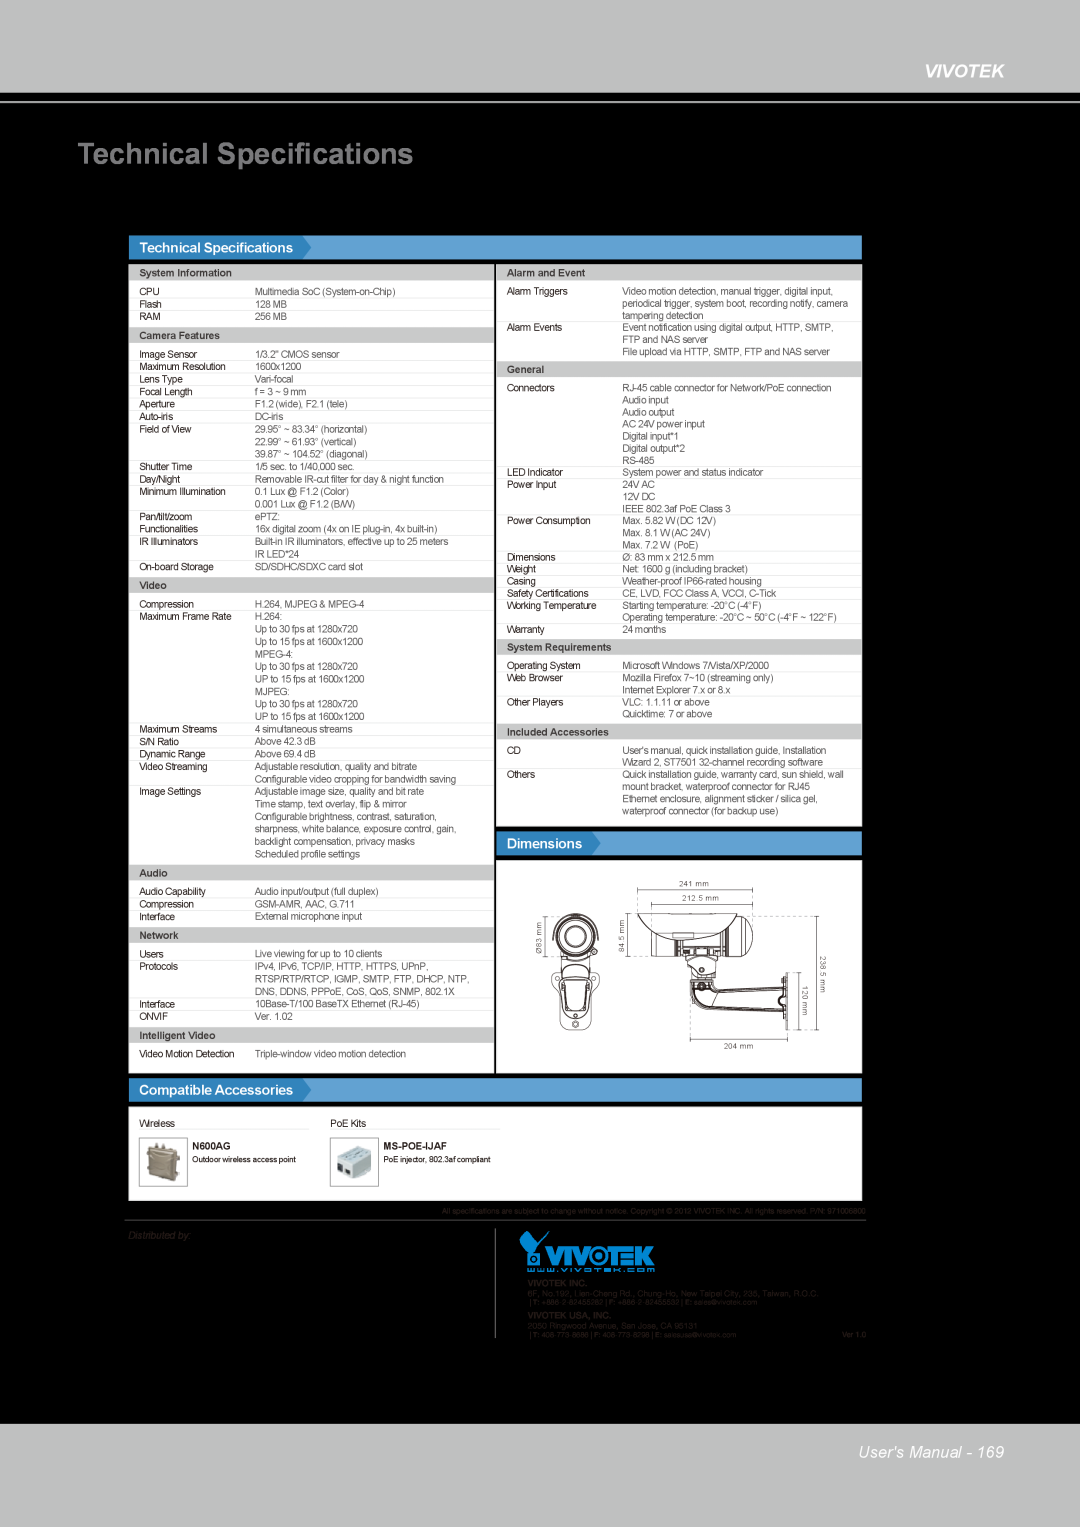 Vivotek IP8361 user manual Technical Specifications, Vivotek, Users Manual, Dimensions, Compatible Accessories 